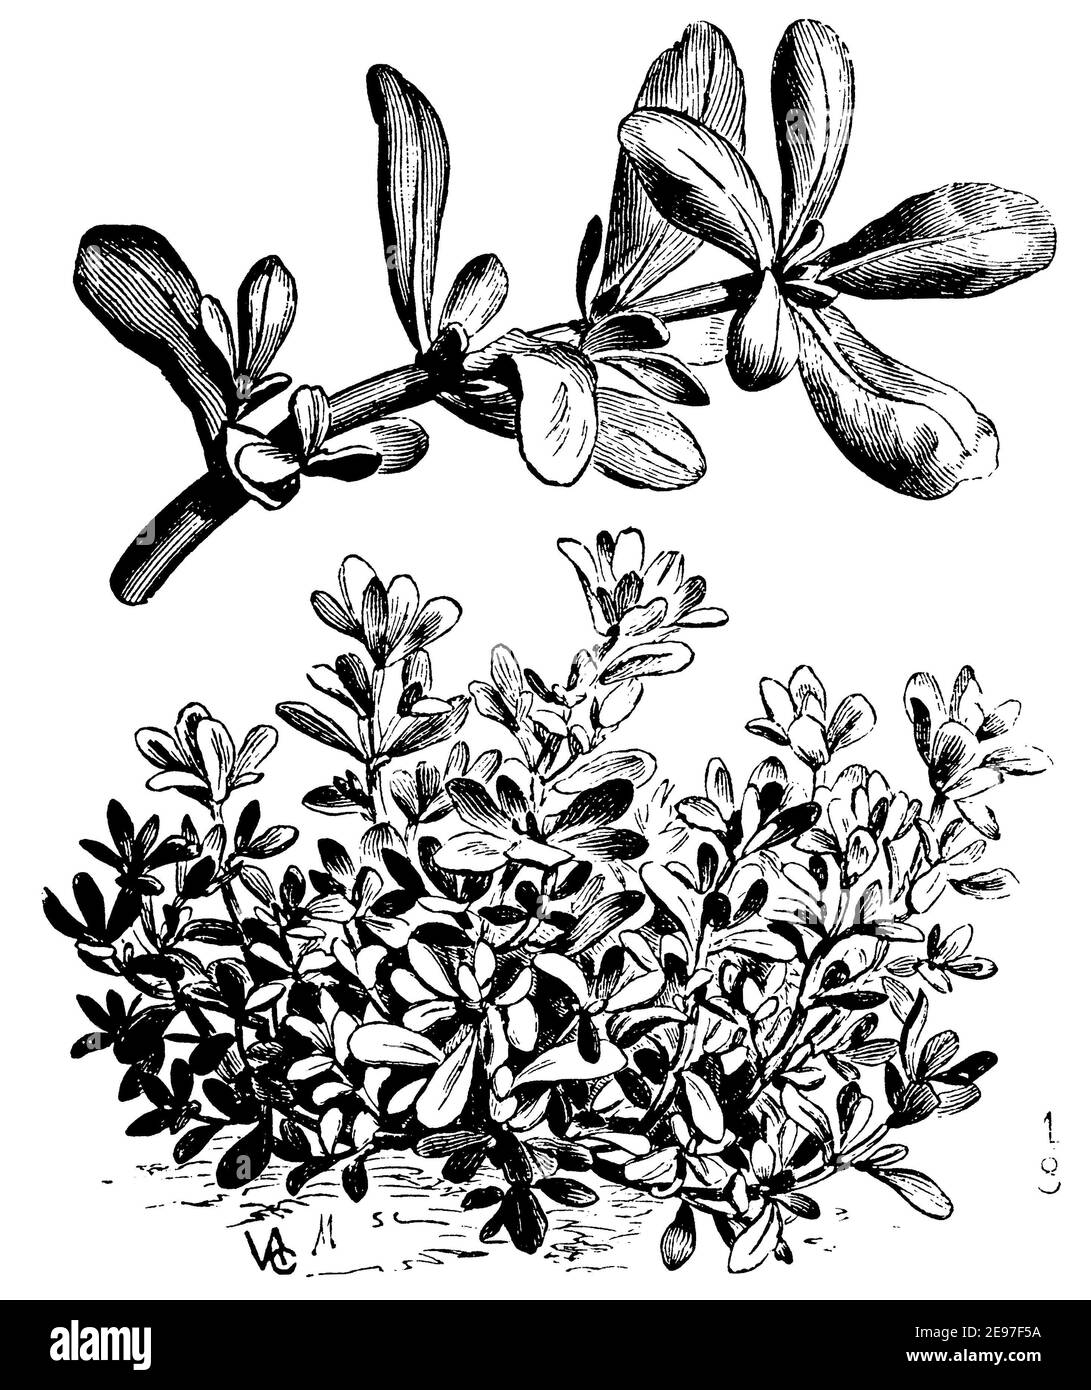 Purslane / Portulaca oleracea / Portulak (livre de motifs d'impression, 1911) Banque D'Images